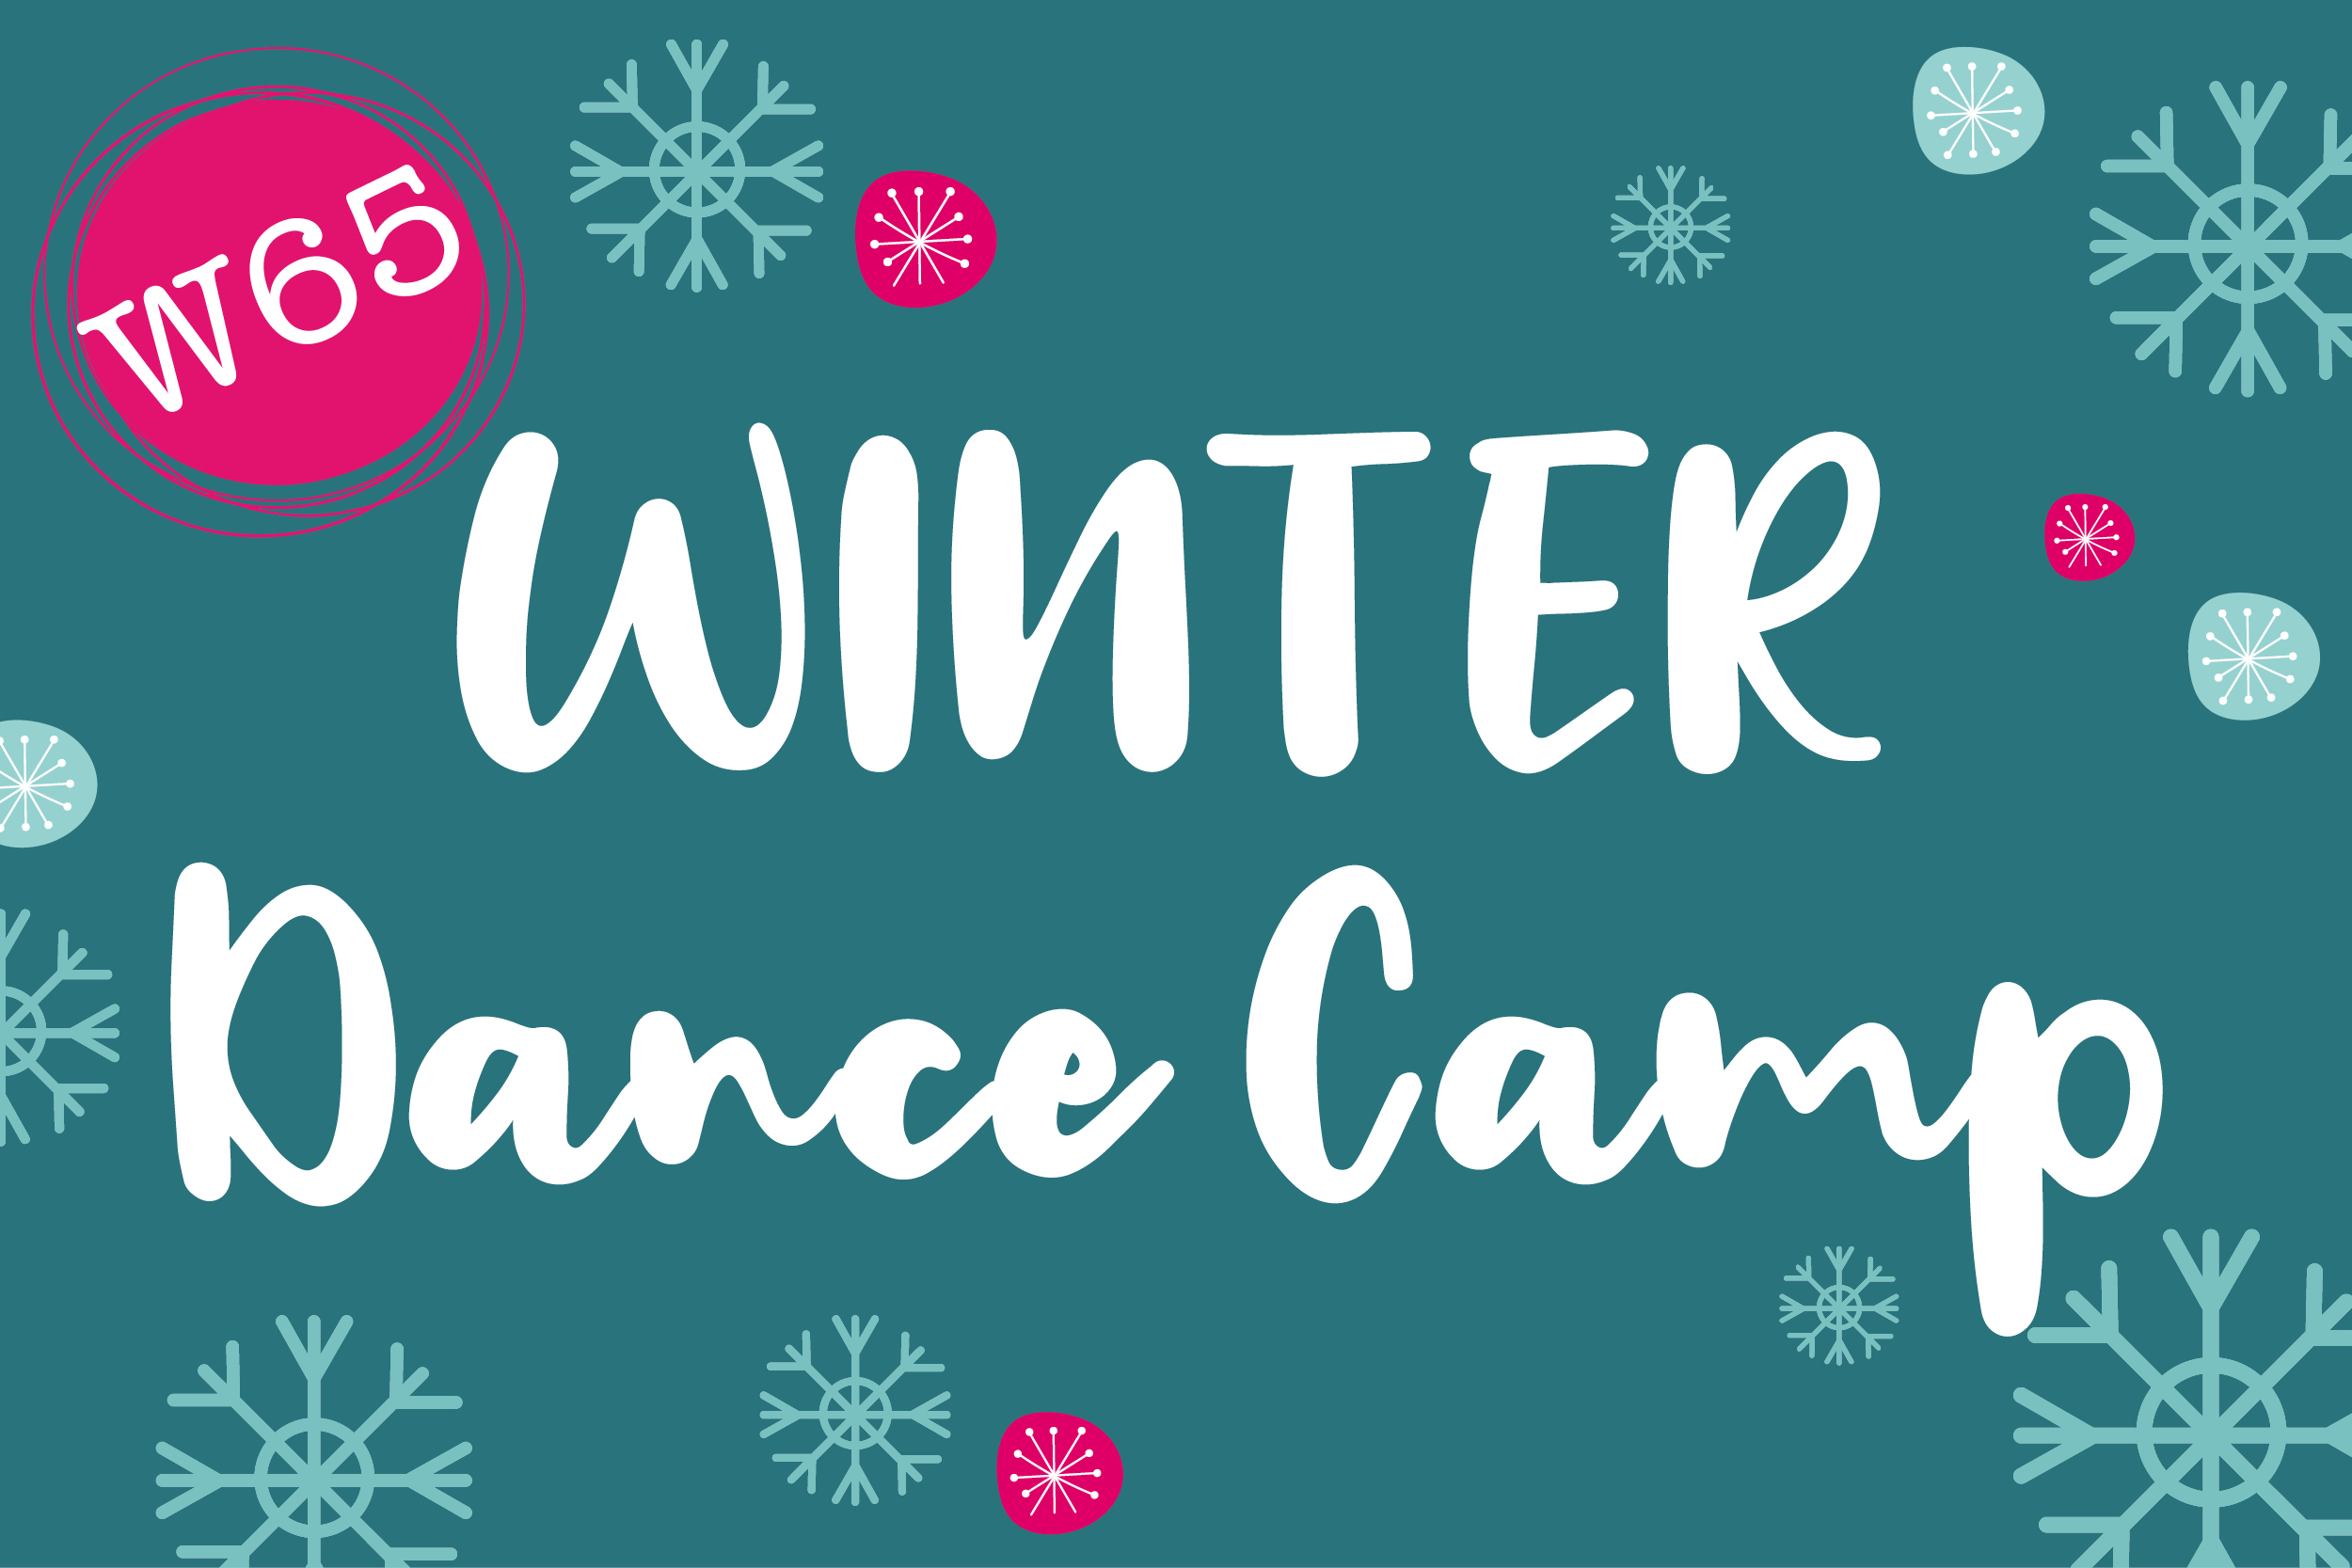 Winter dance Camp Tout Updated